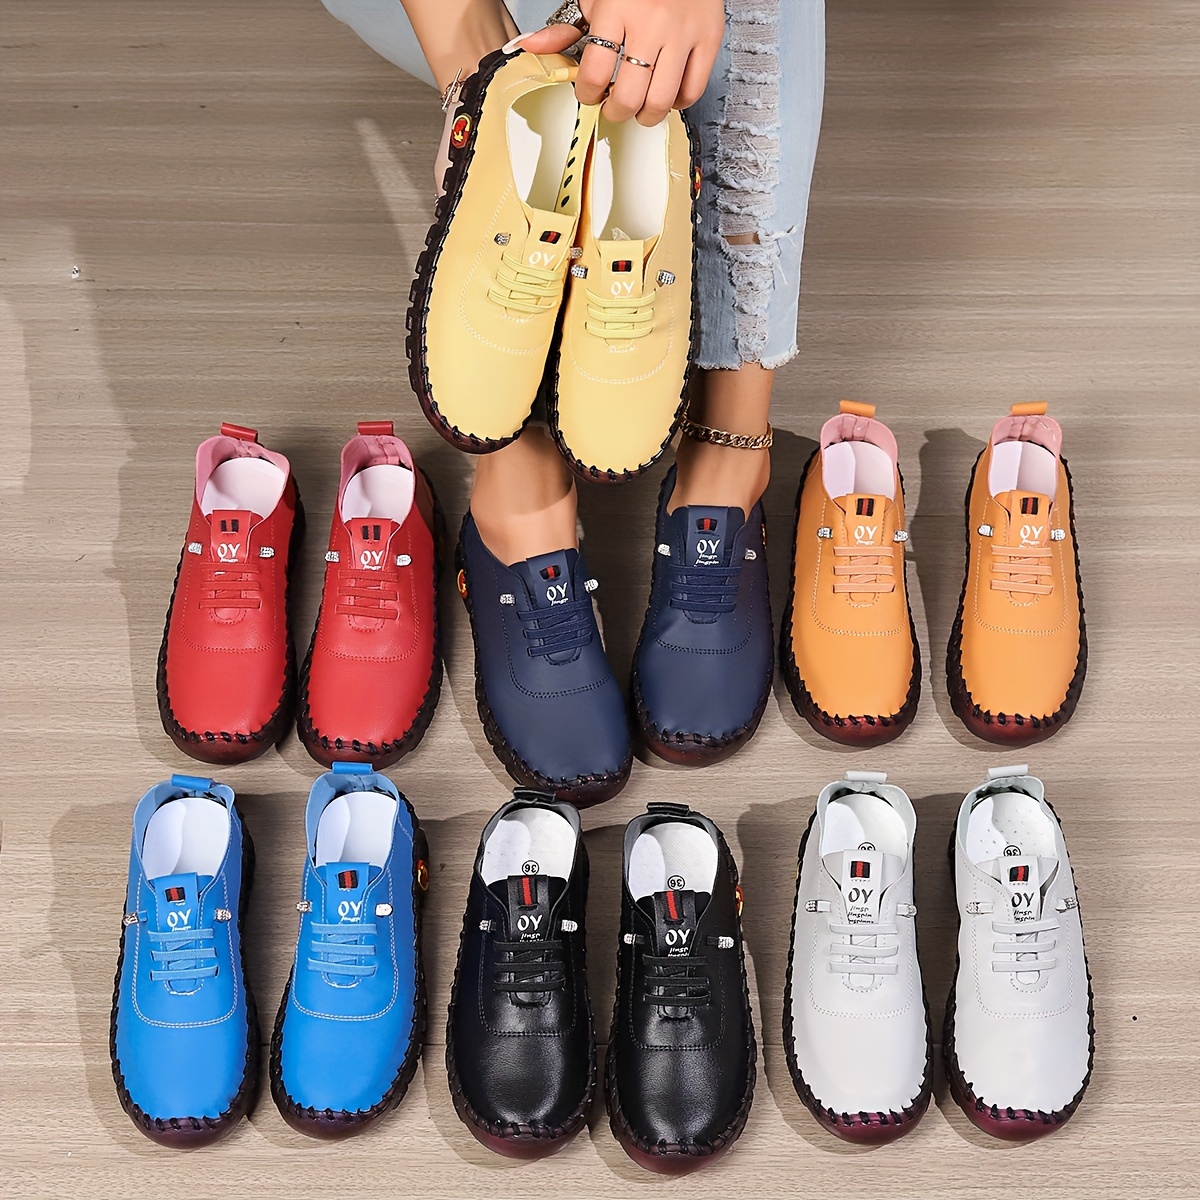 Women s Solid Color Casual Sneakers, Soft Sole Platform Slip On Walking Shoes, Low-top Versatile Comfy Shoes details 0